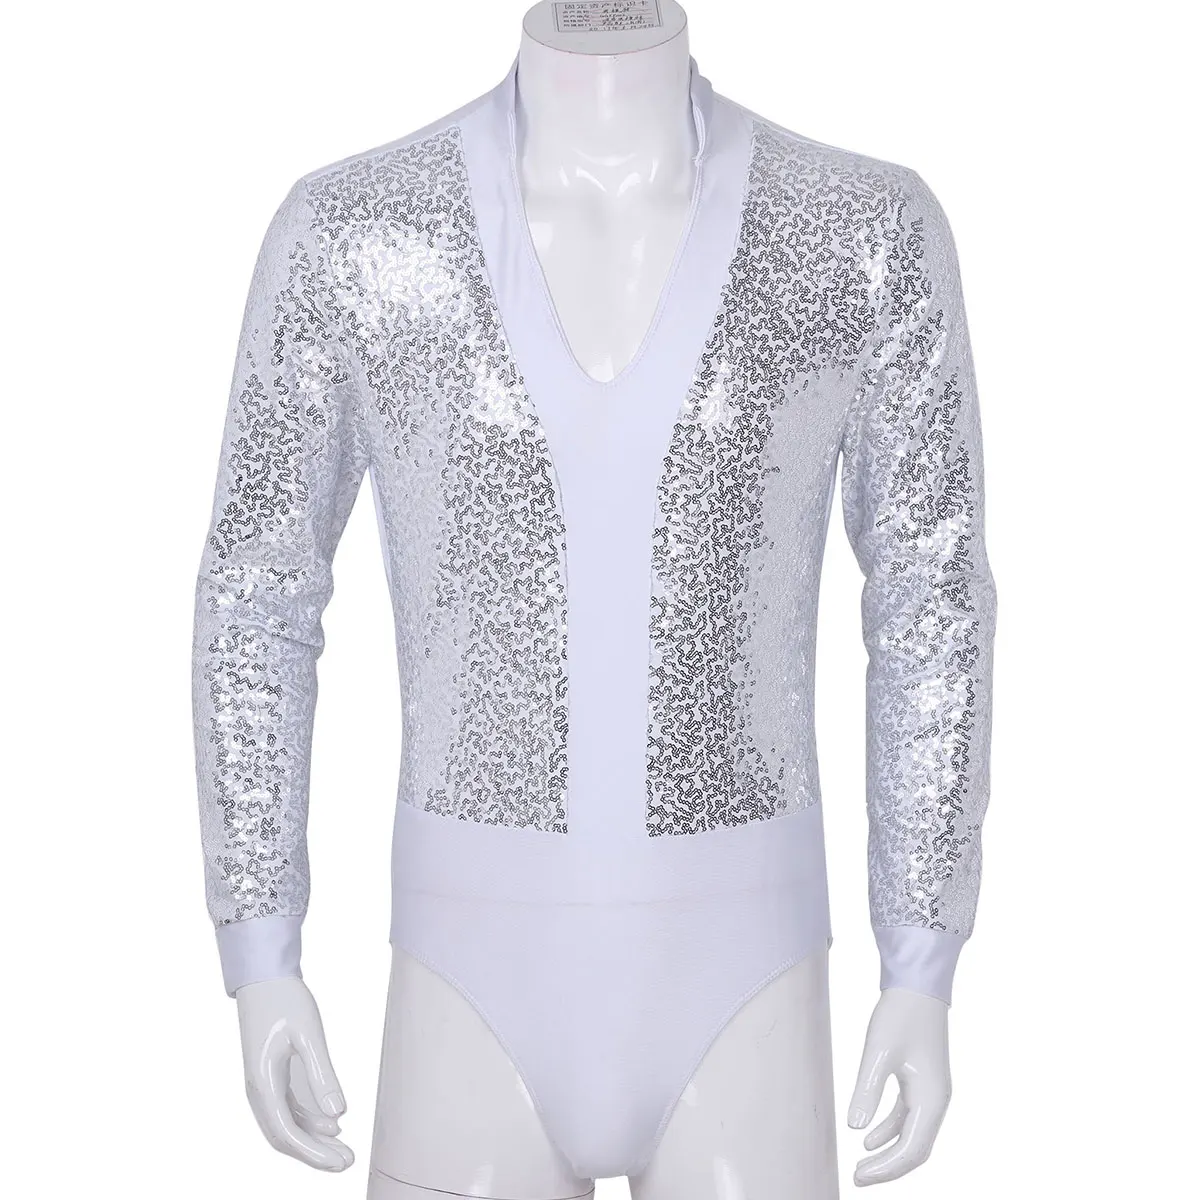 Men Leotard Ballet Bodysuit One piece Shiny Sequins V Neck Long Sleeves High Cut Dance Shirt Short Unitards Leotard Bodysuit